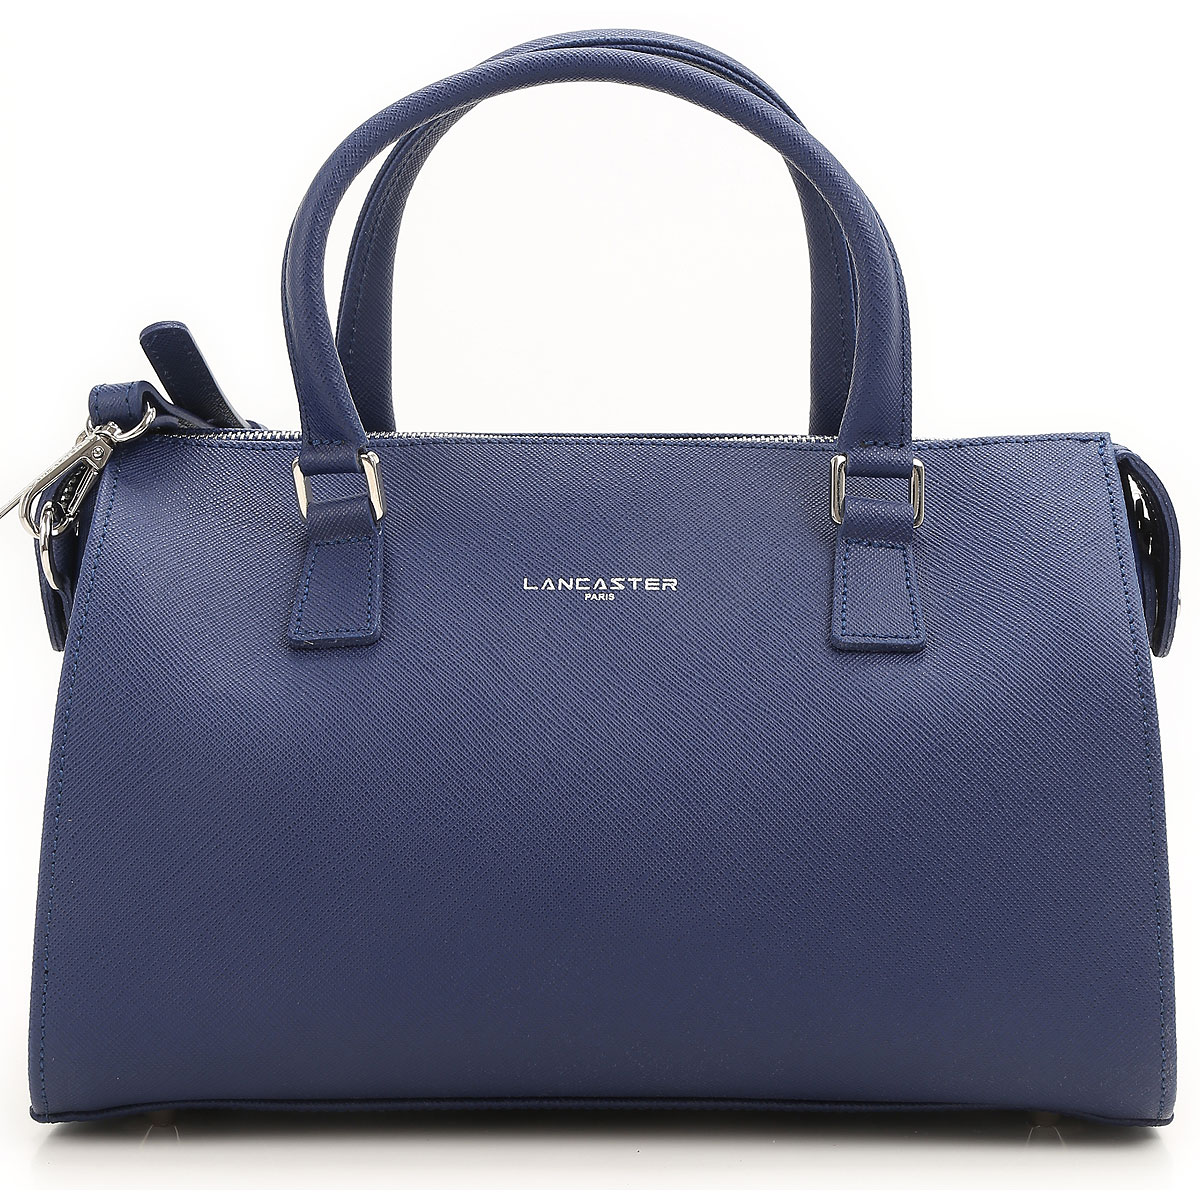 Handbags Lancaster, Style code: 42145-blue-n914